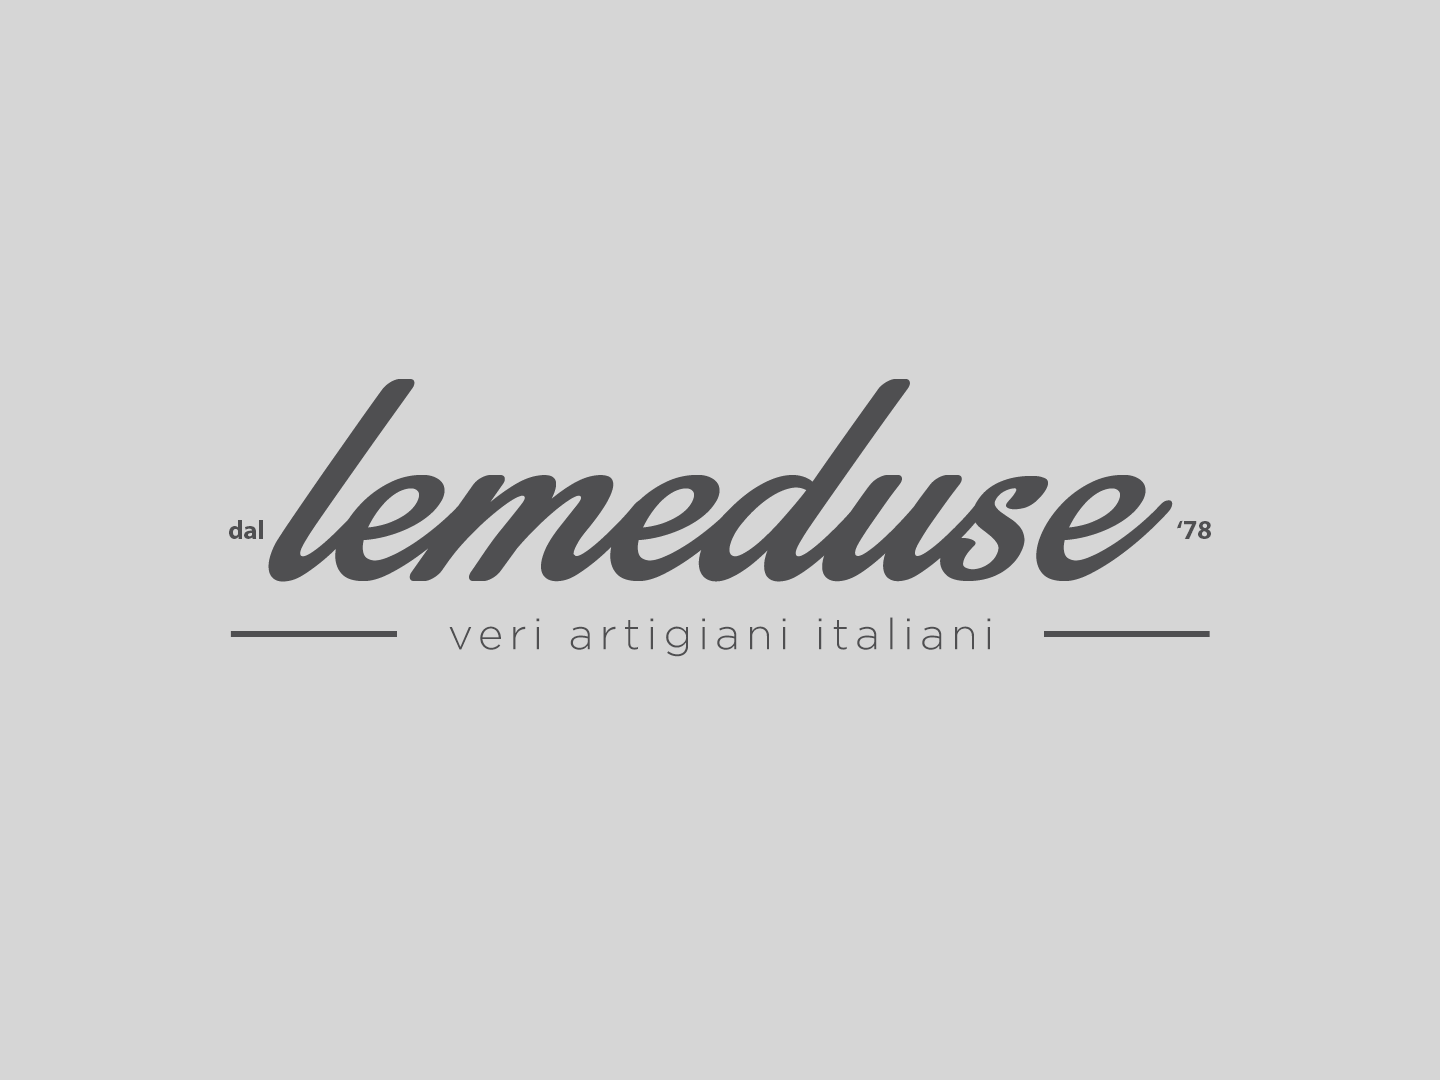 LeMeduse Concept Logo by Lucian Manoliu on Dribbble